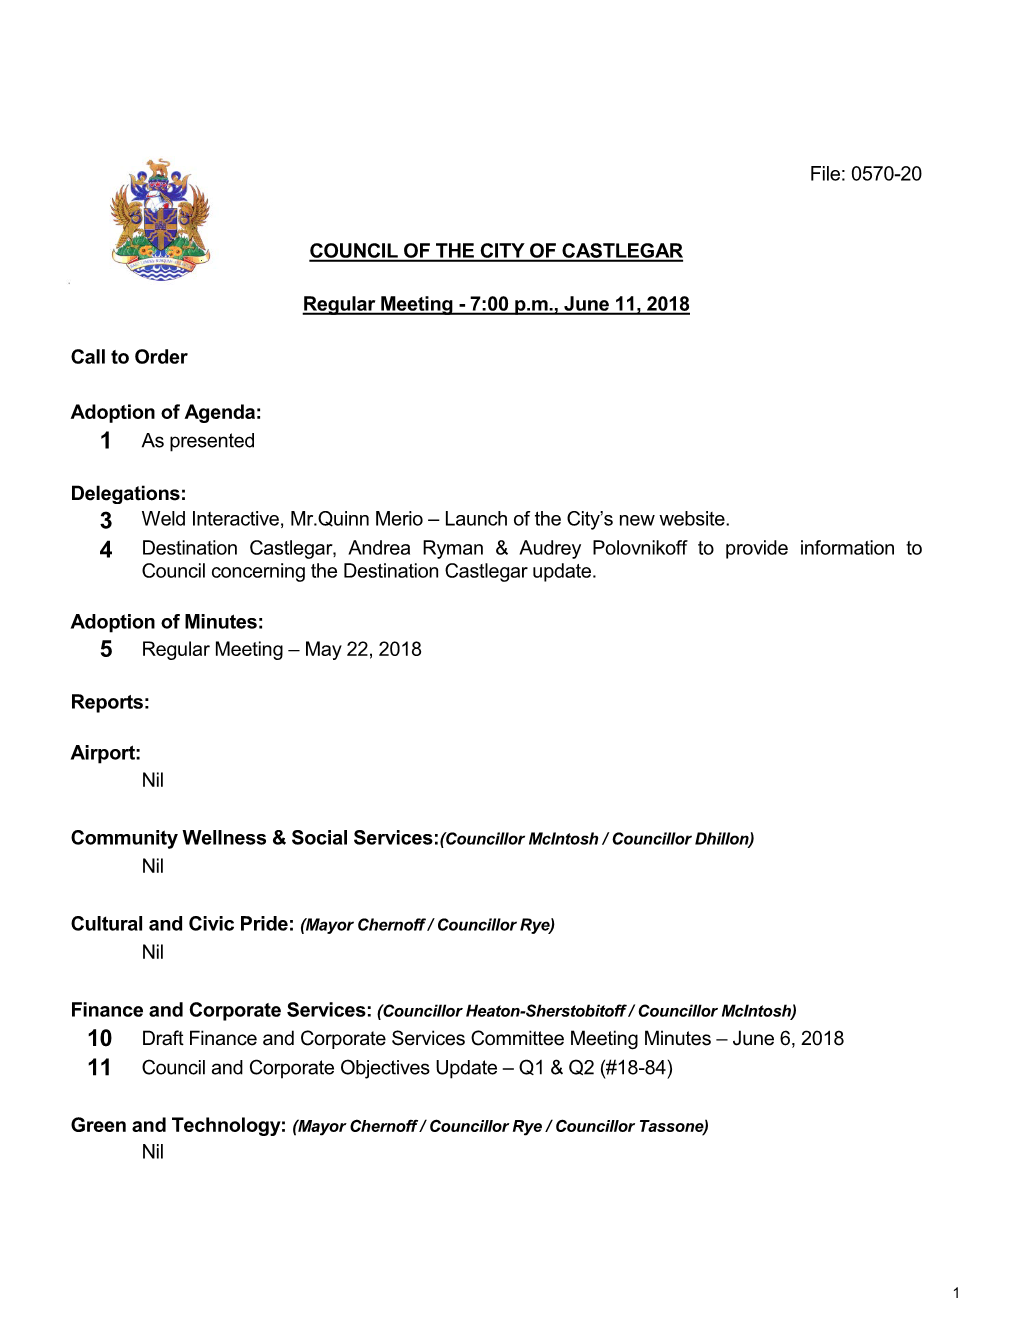 0570-20 COUNCIL of the CITY of CASTLEGAR Regular Meeting